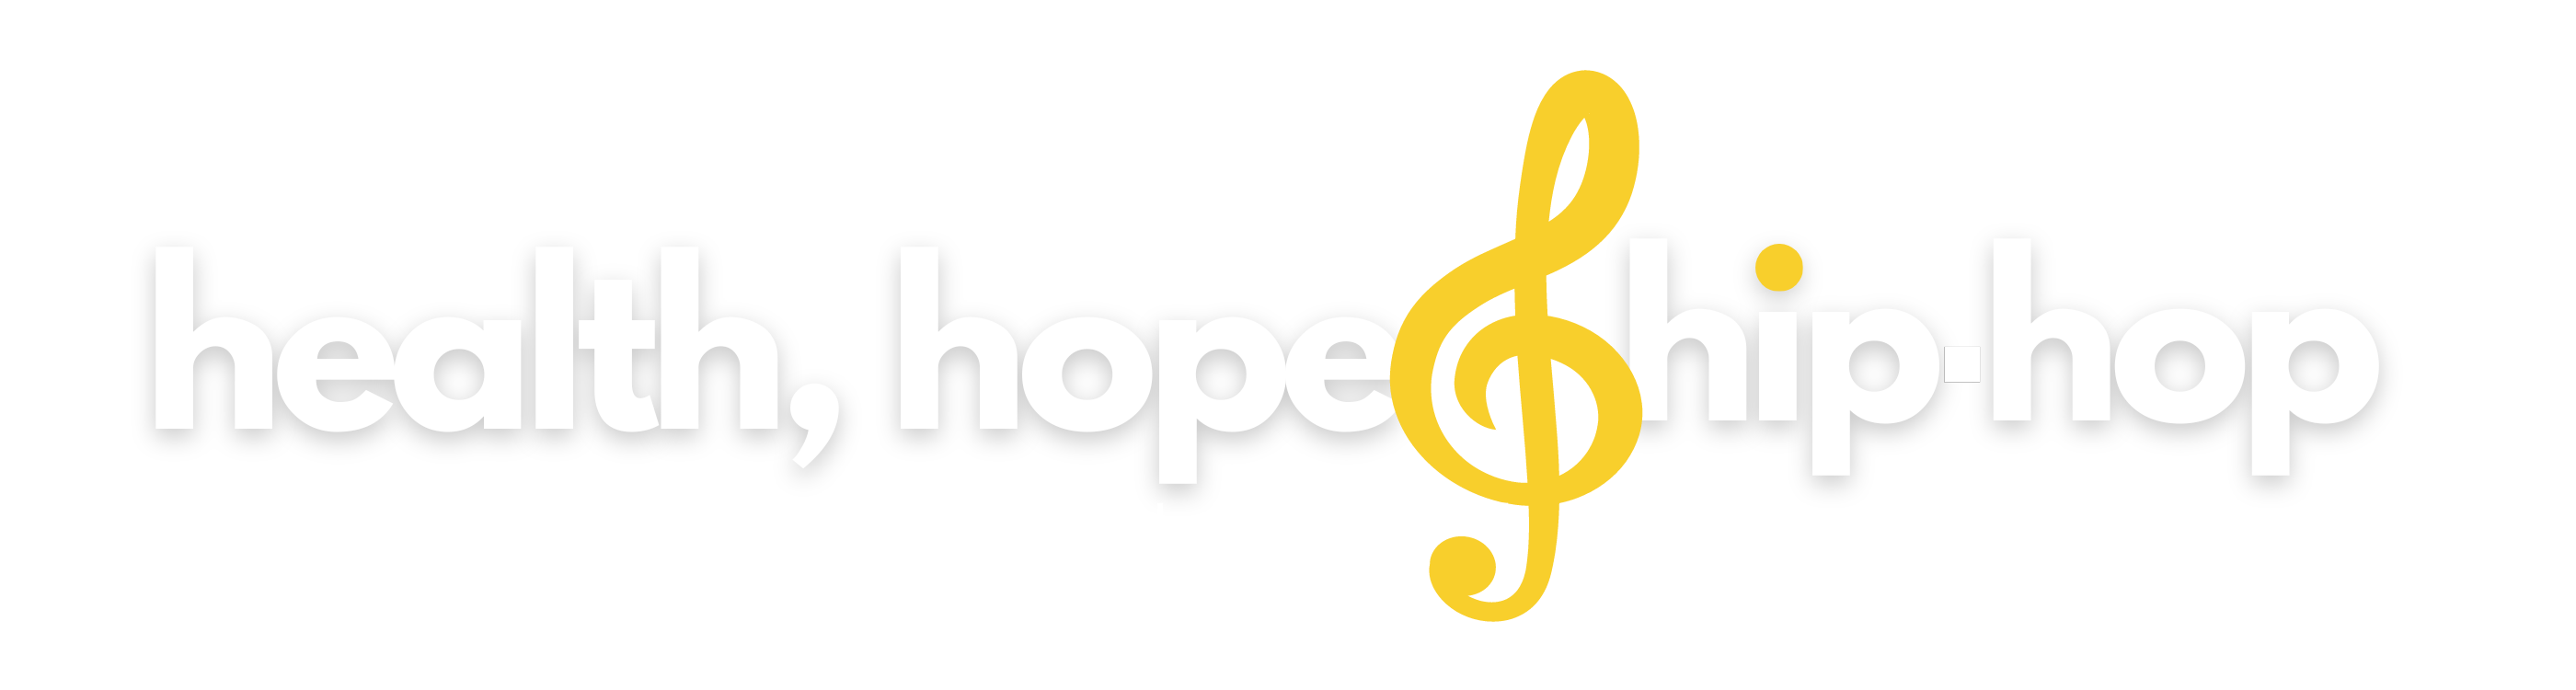 Health, Hope & Hip-Hop Foundation